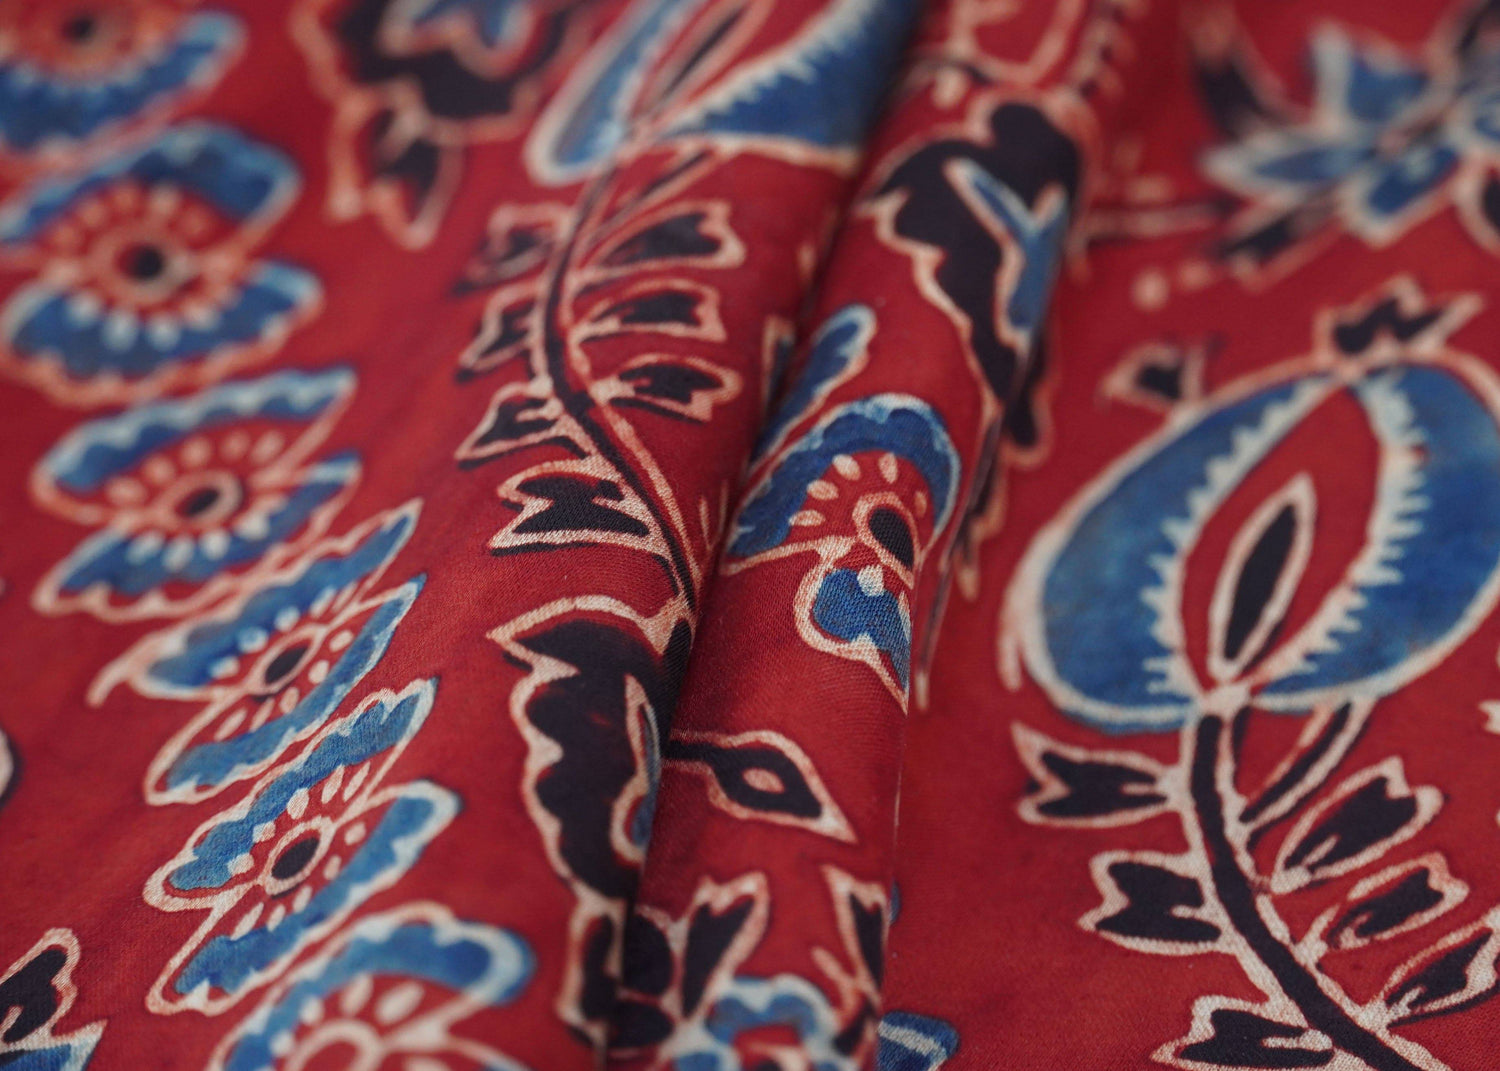 Red Hand Block Ajrakh Modal Silk Fabric